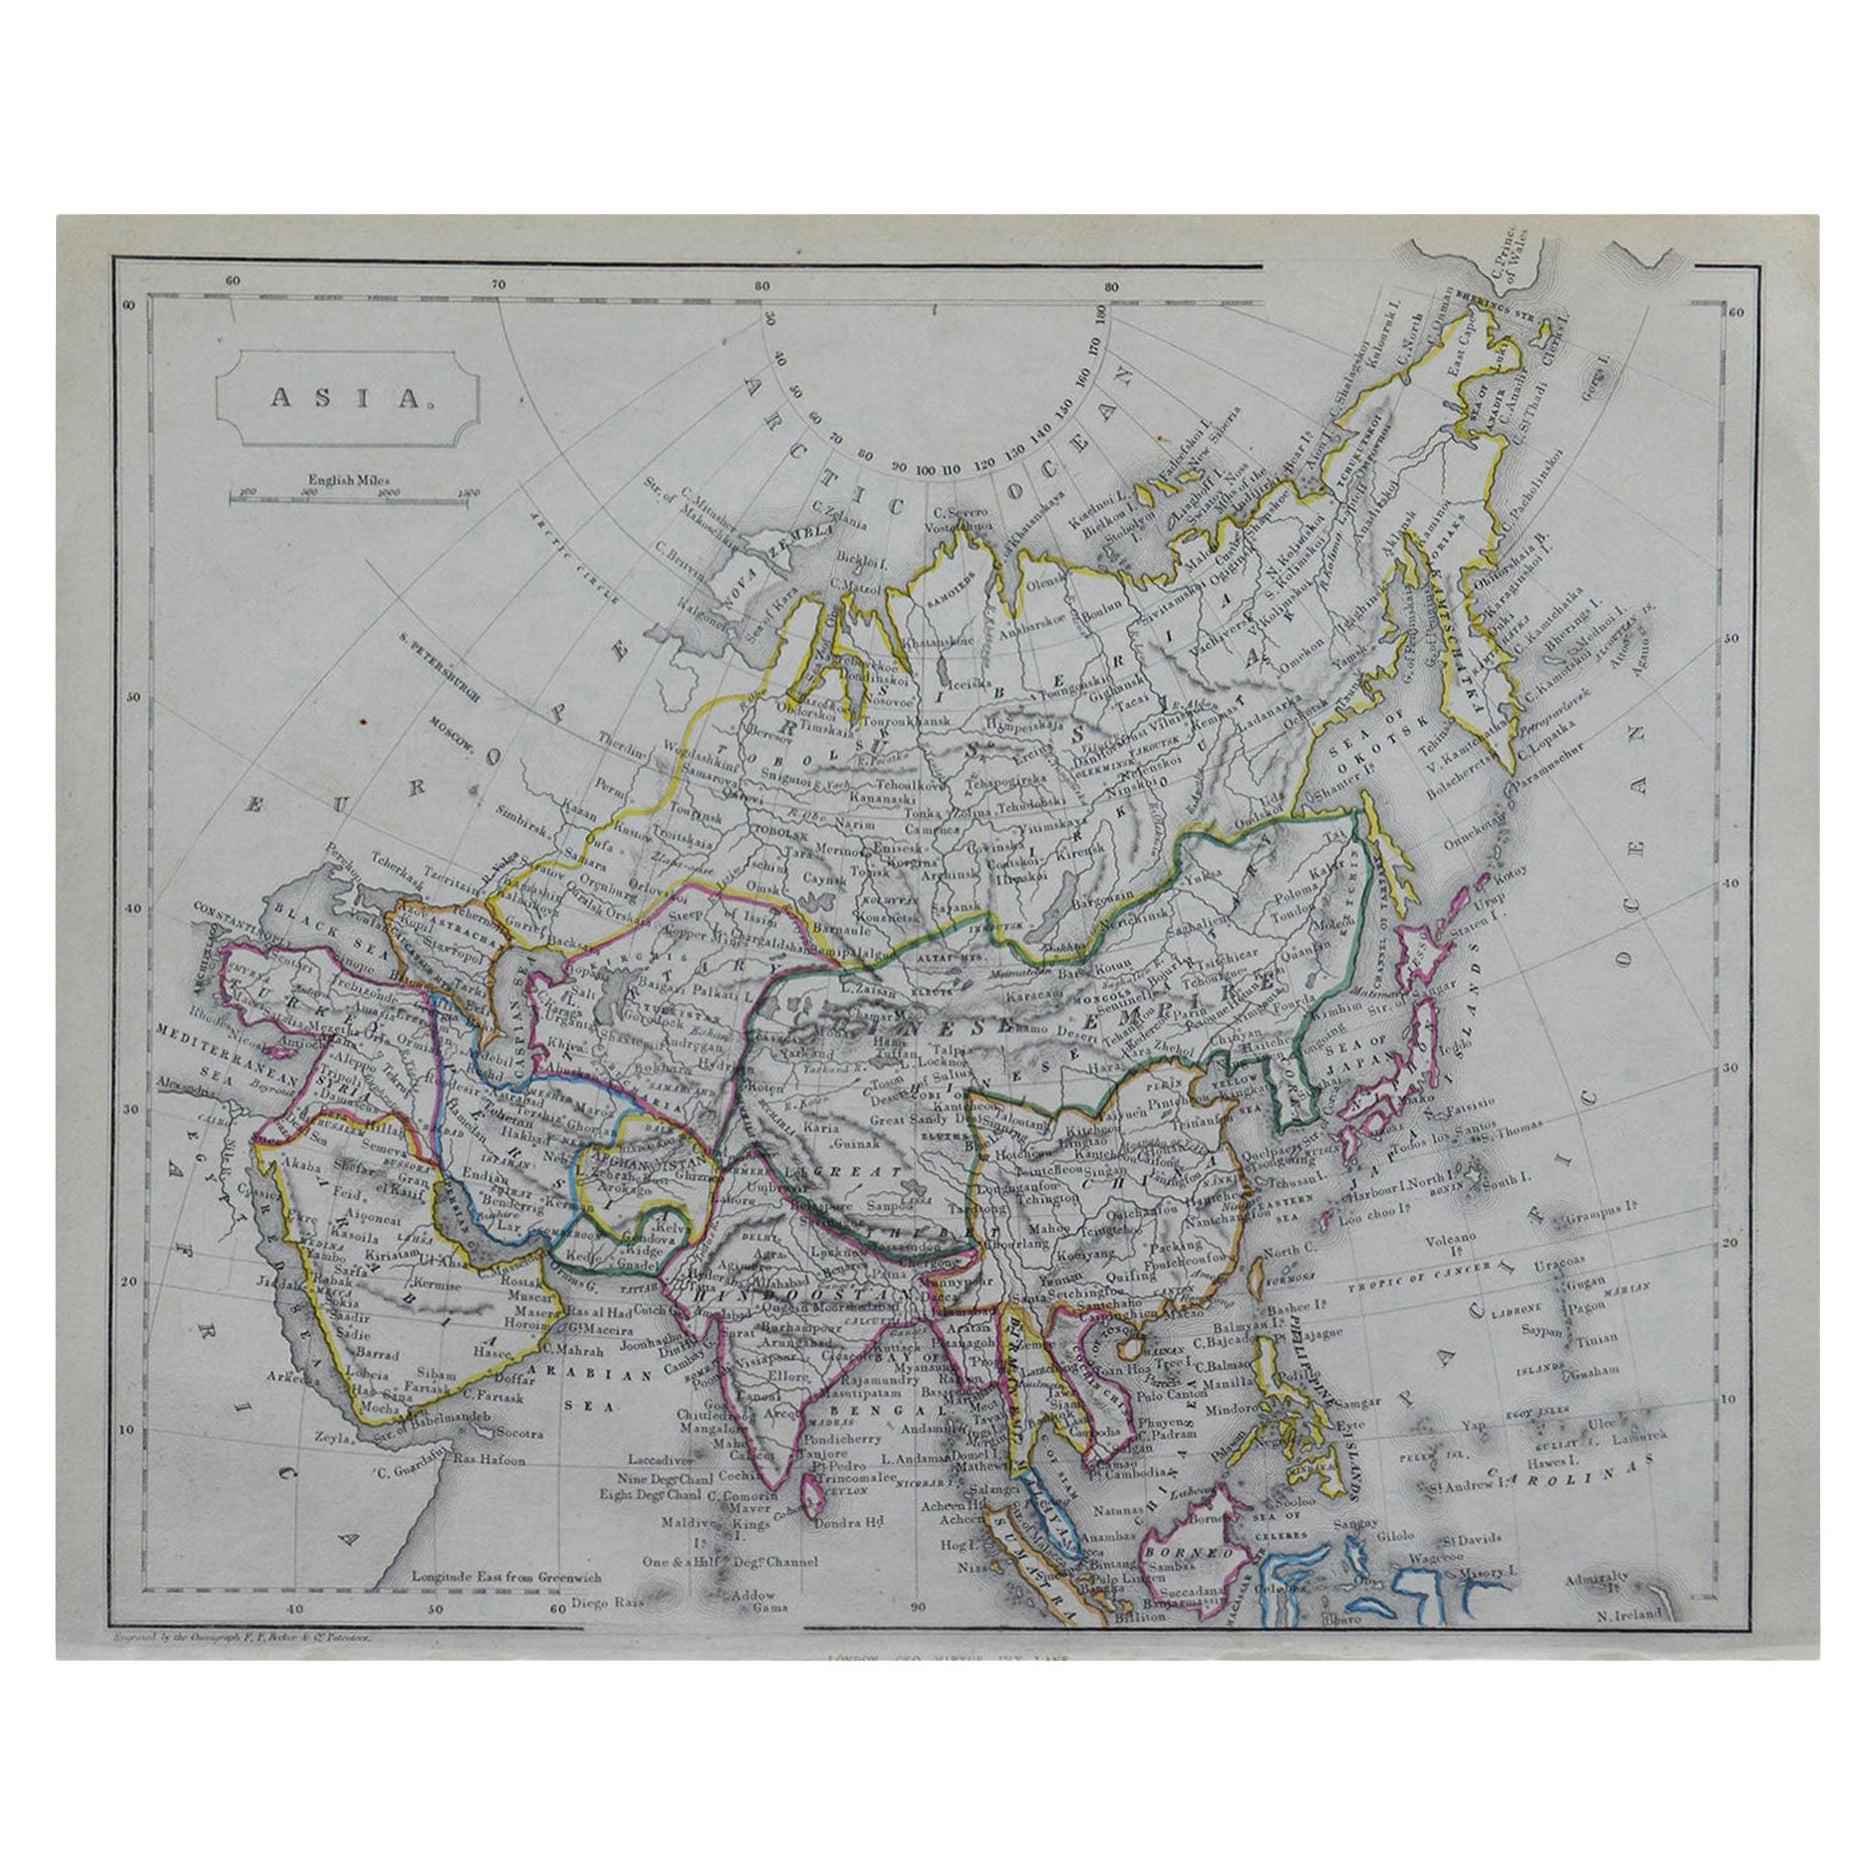 Original Antique Map of Asia by Becker, circa 1840